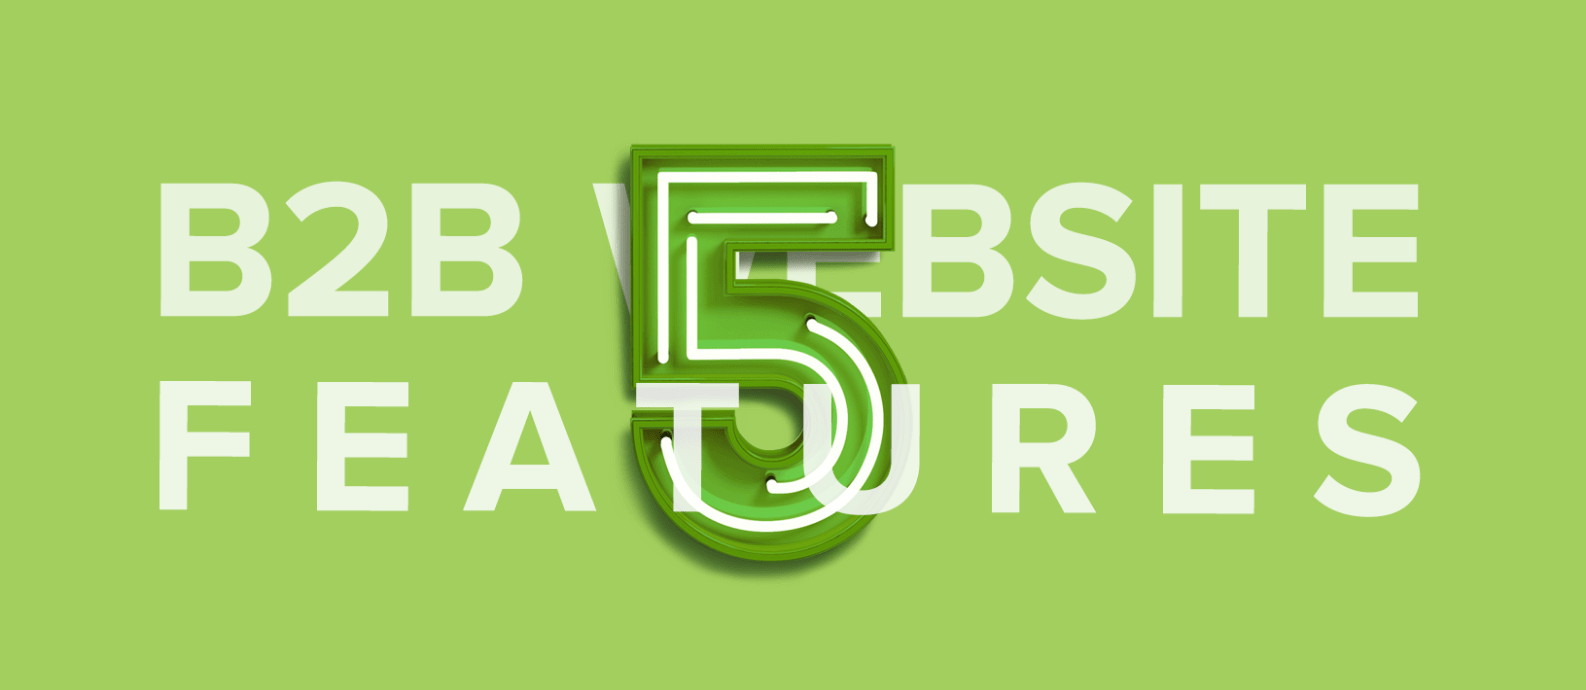 b2b website features, Web Strategy, San Jose